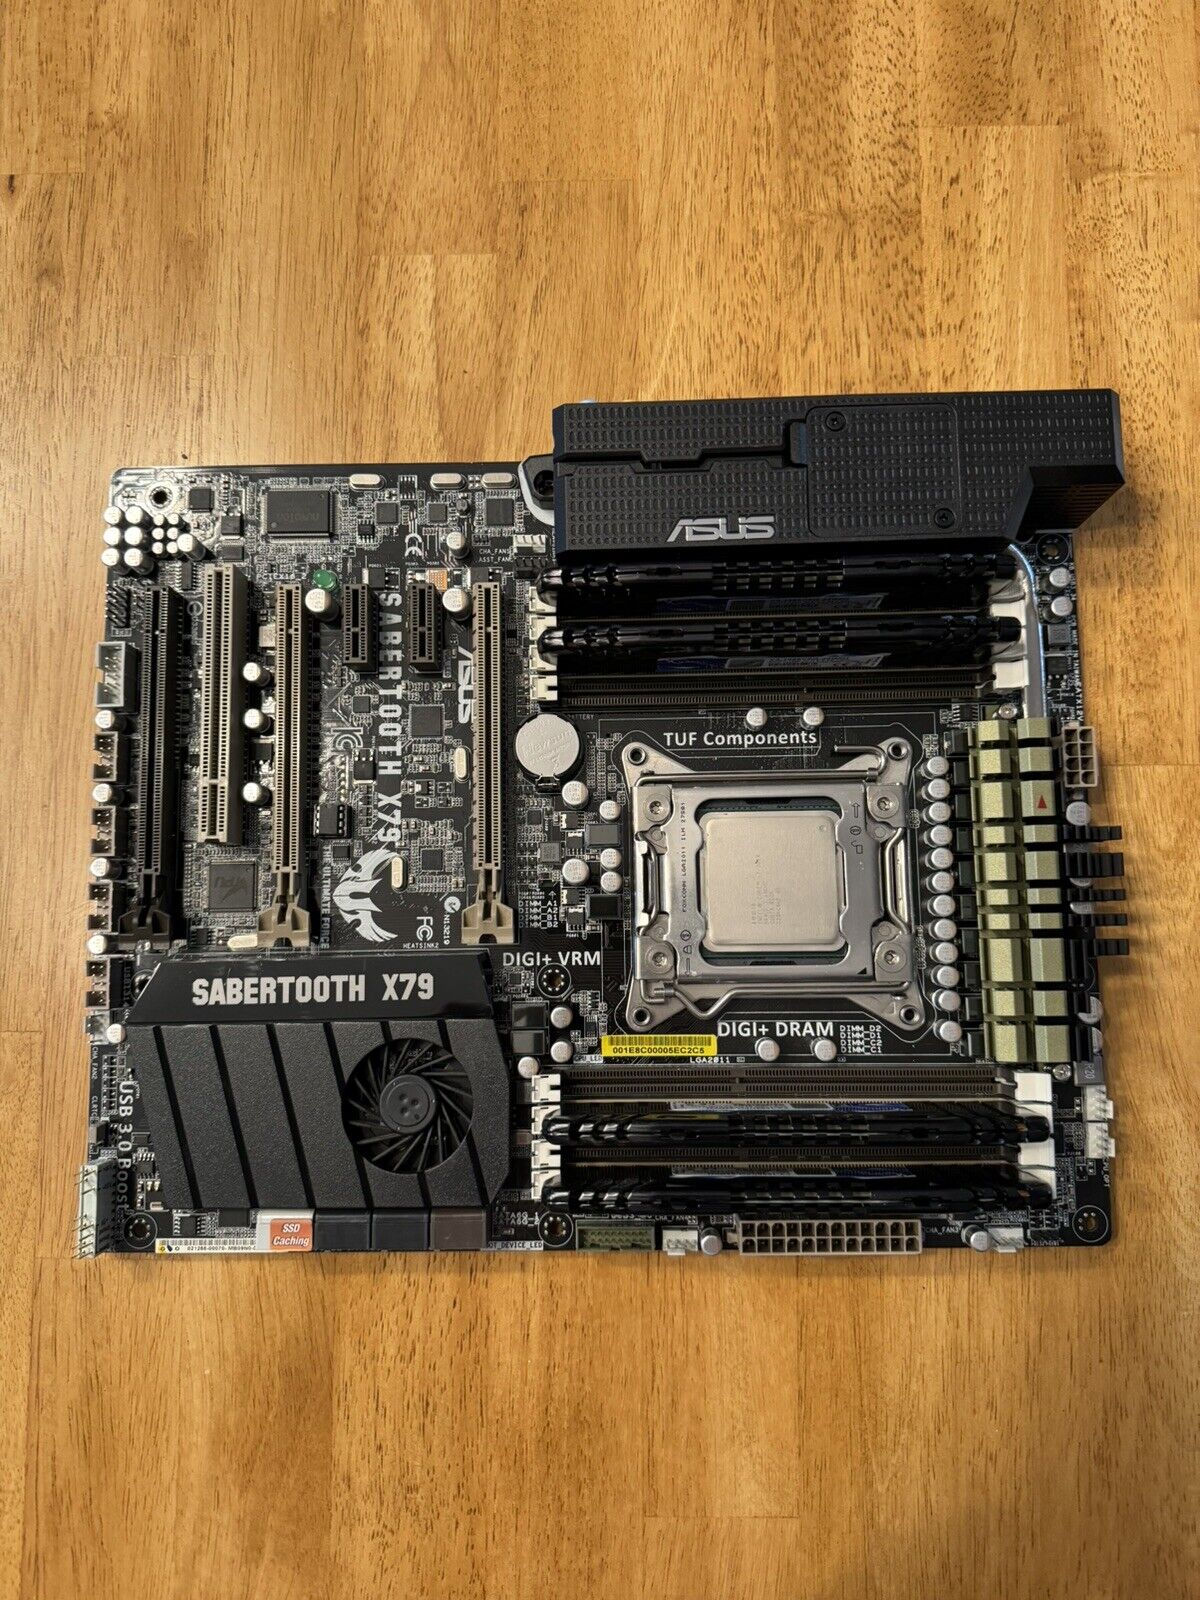 ASUS Sabertooth X79 TUF, LGA 2011, ATX Motherboard with CPU i7-3820 and 32GB RAM